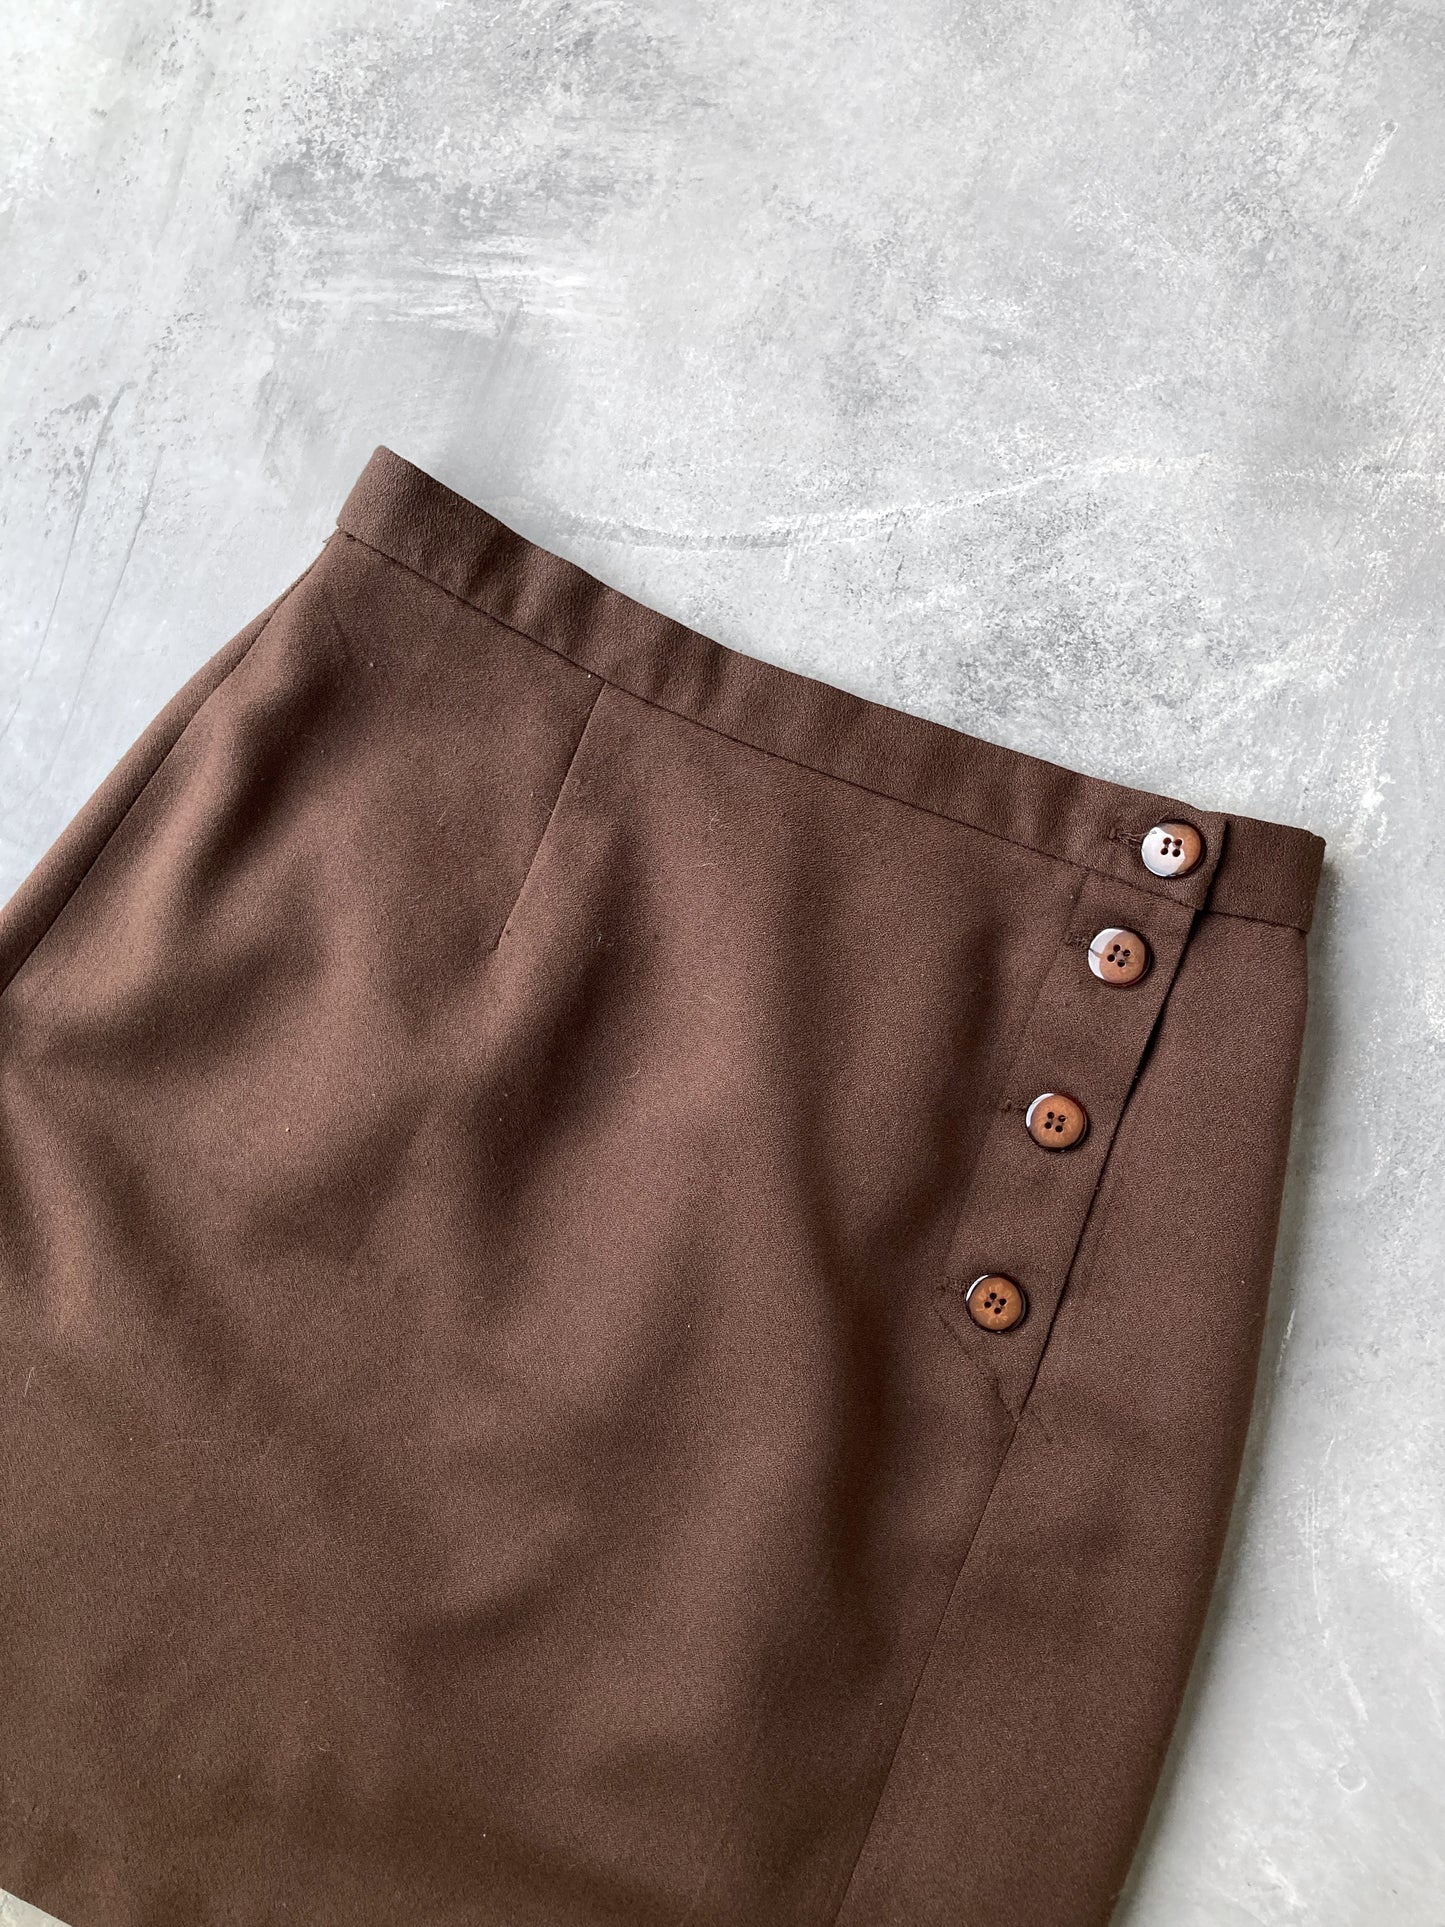 Brown Mini Skirt 70’s - Small (4 - 6)